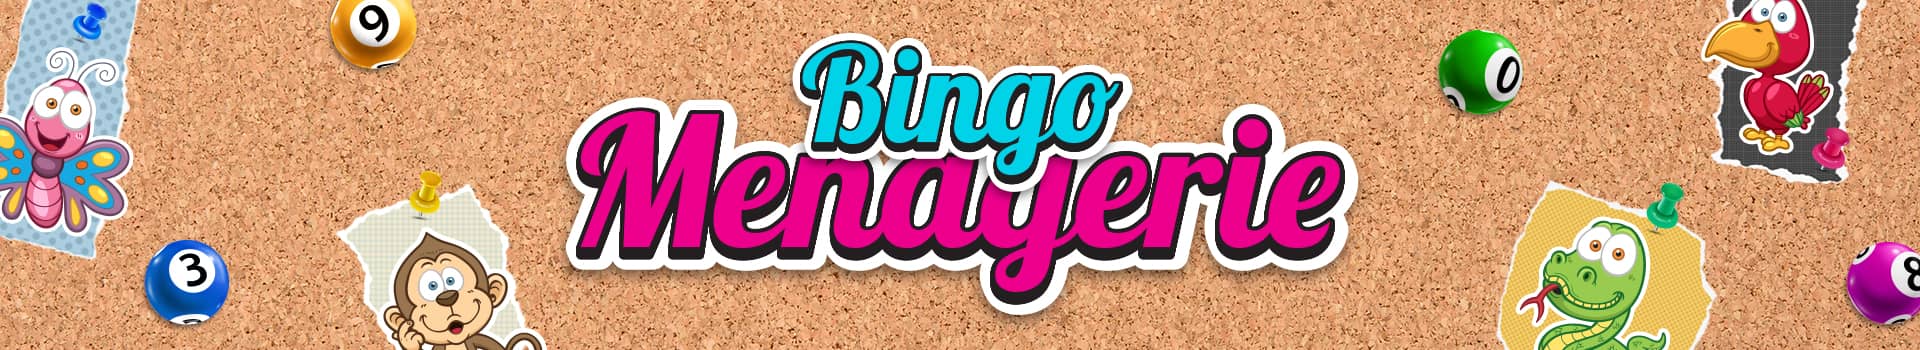 Bingo mangerie banner